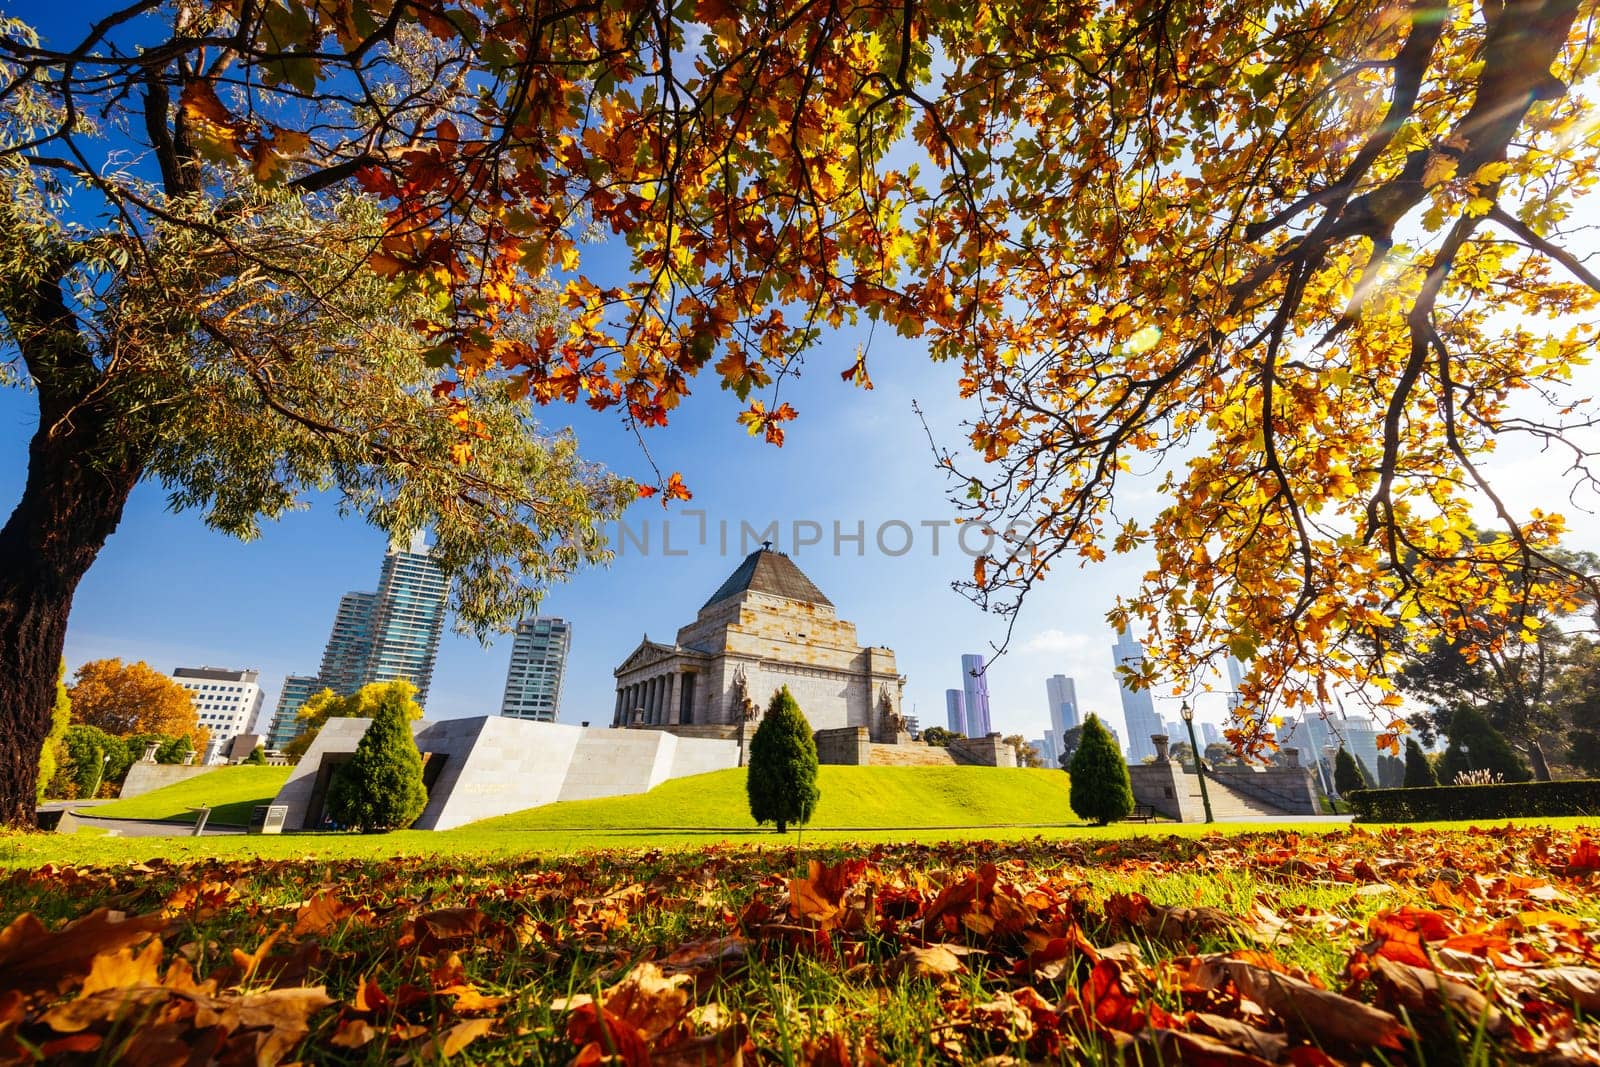 Shrine of Remembrance in Melbourne Australia by FiledIMAGE